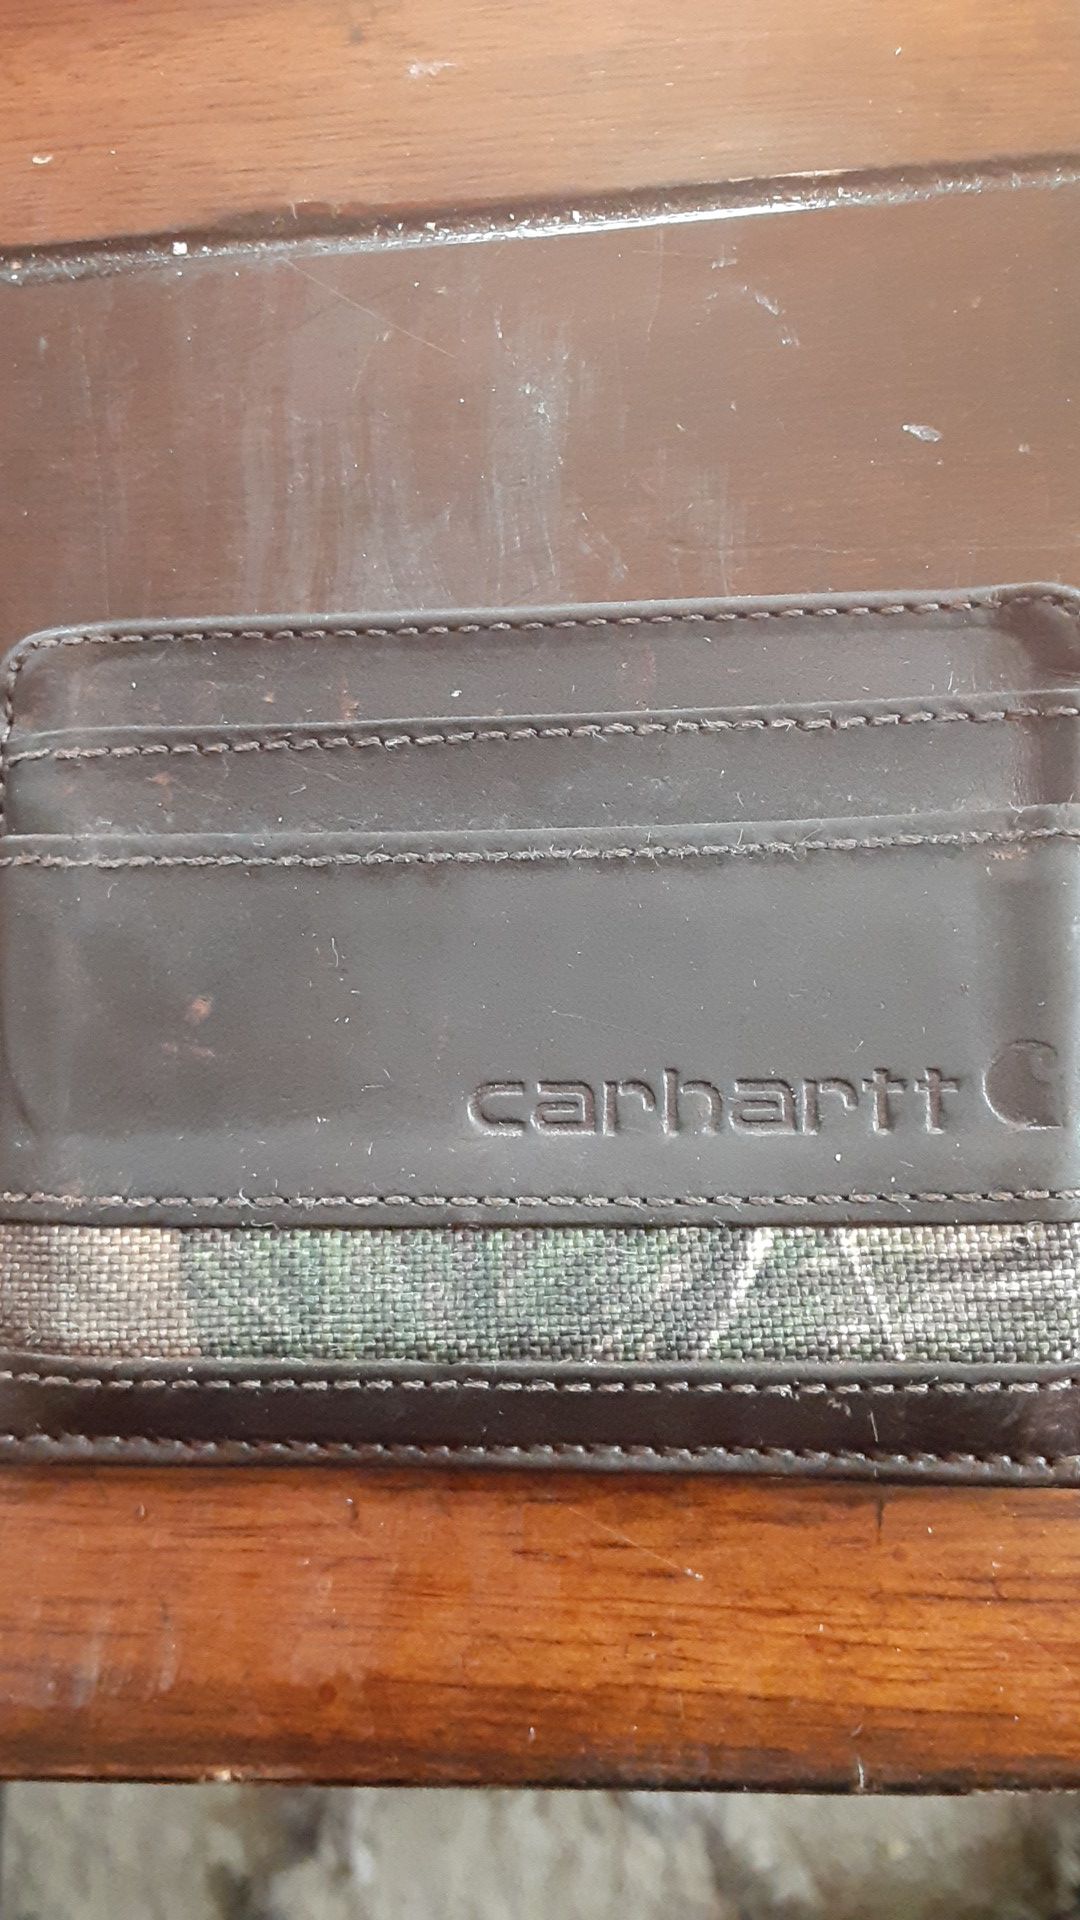 Carhart front pocket wallet